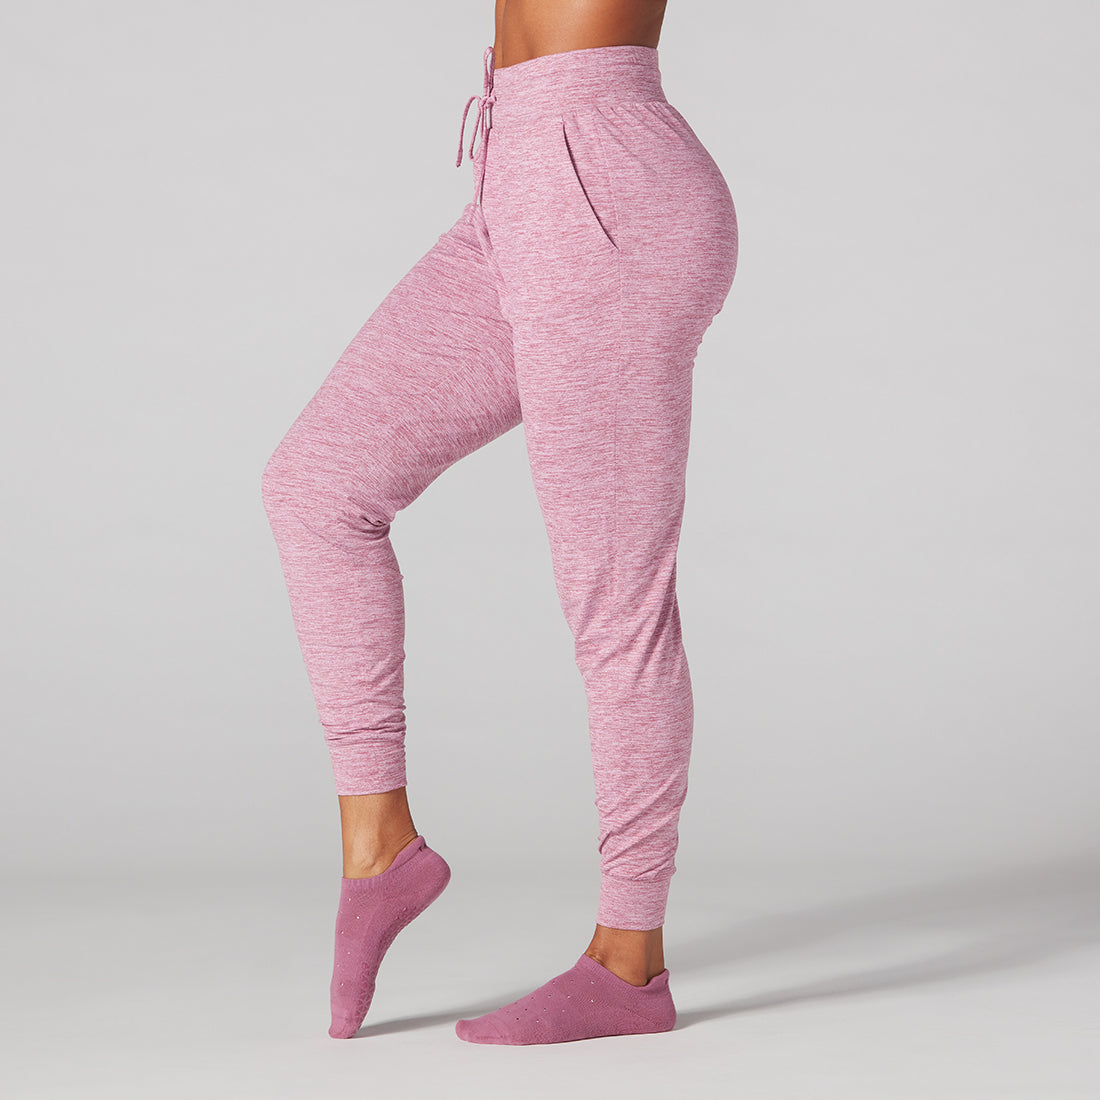 Columbia Women's Tested Tough in Pink Legging, Black, Large at